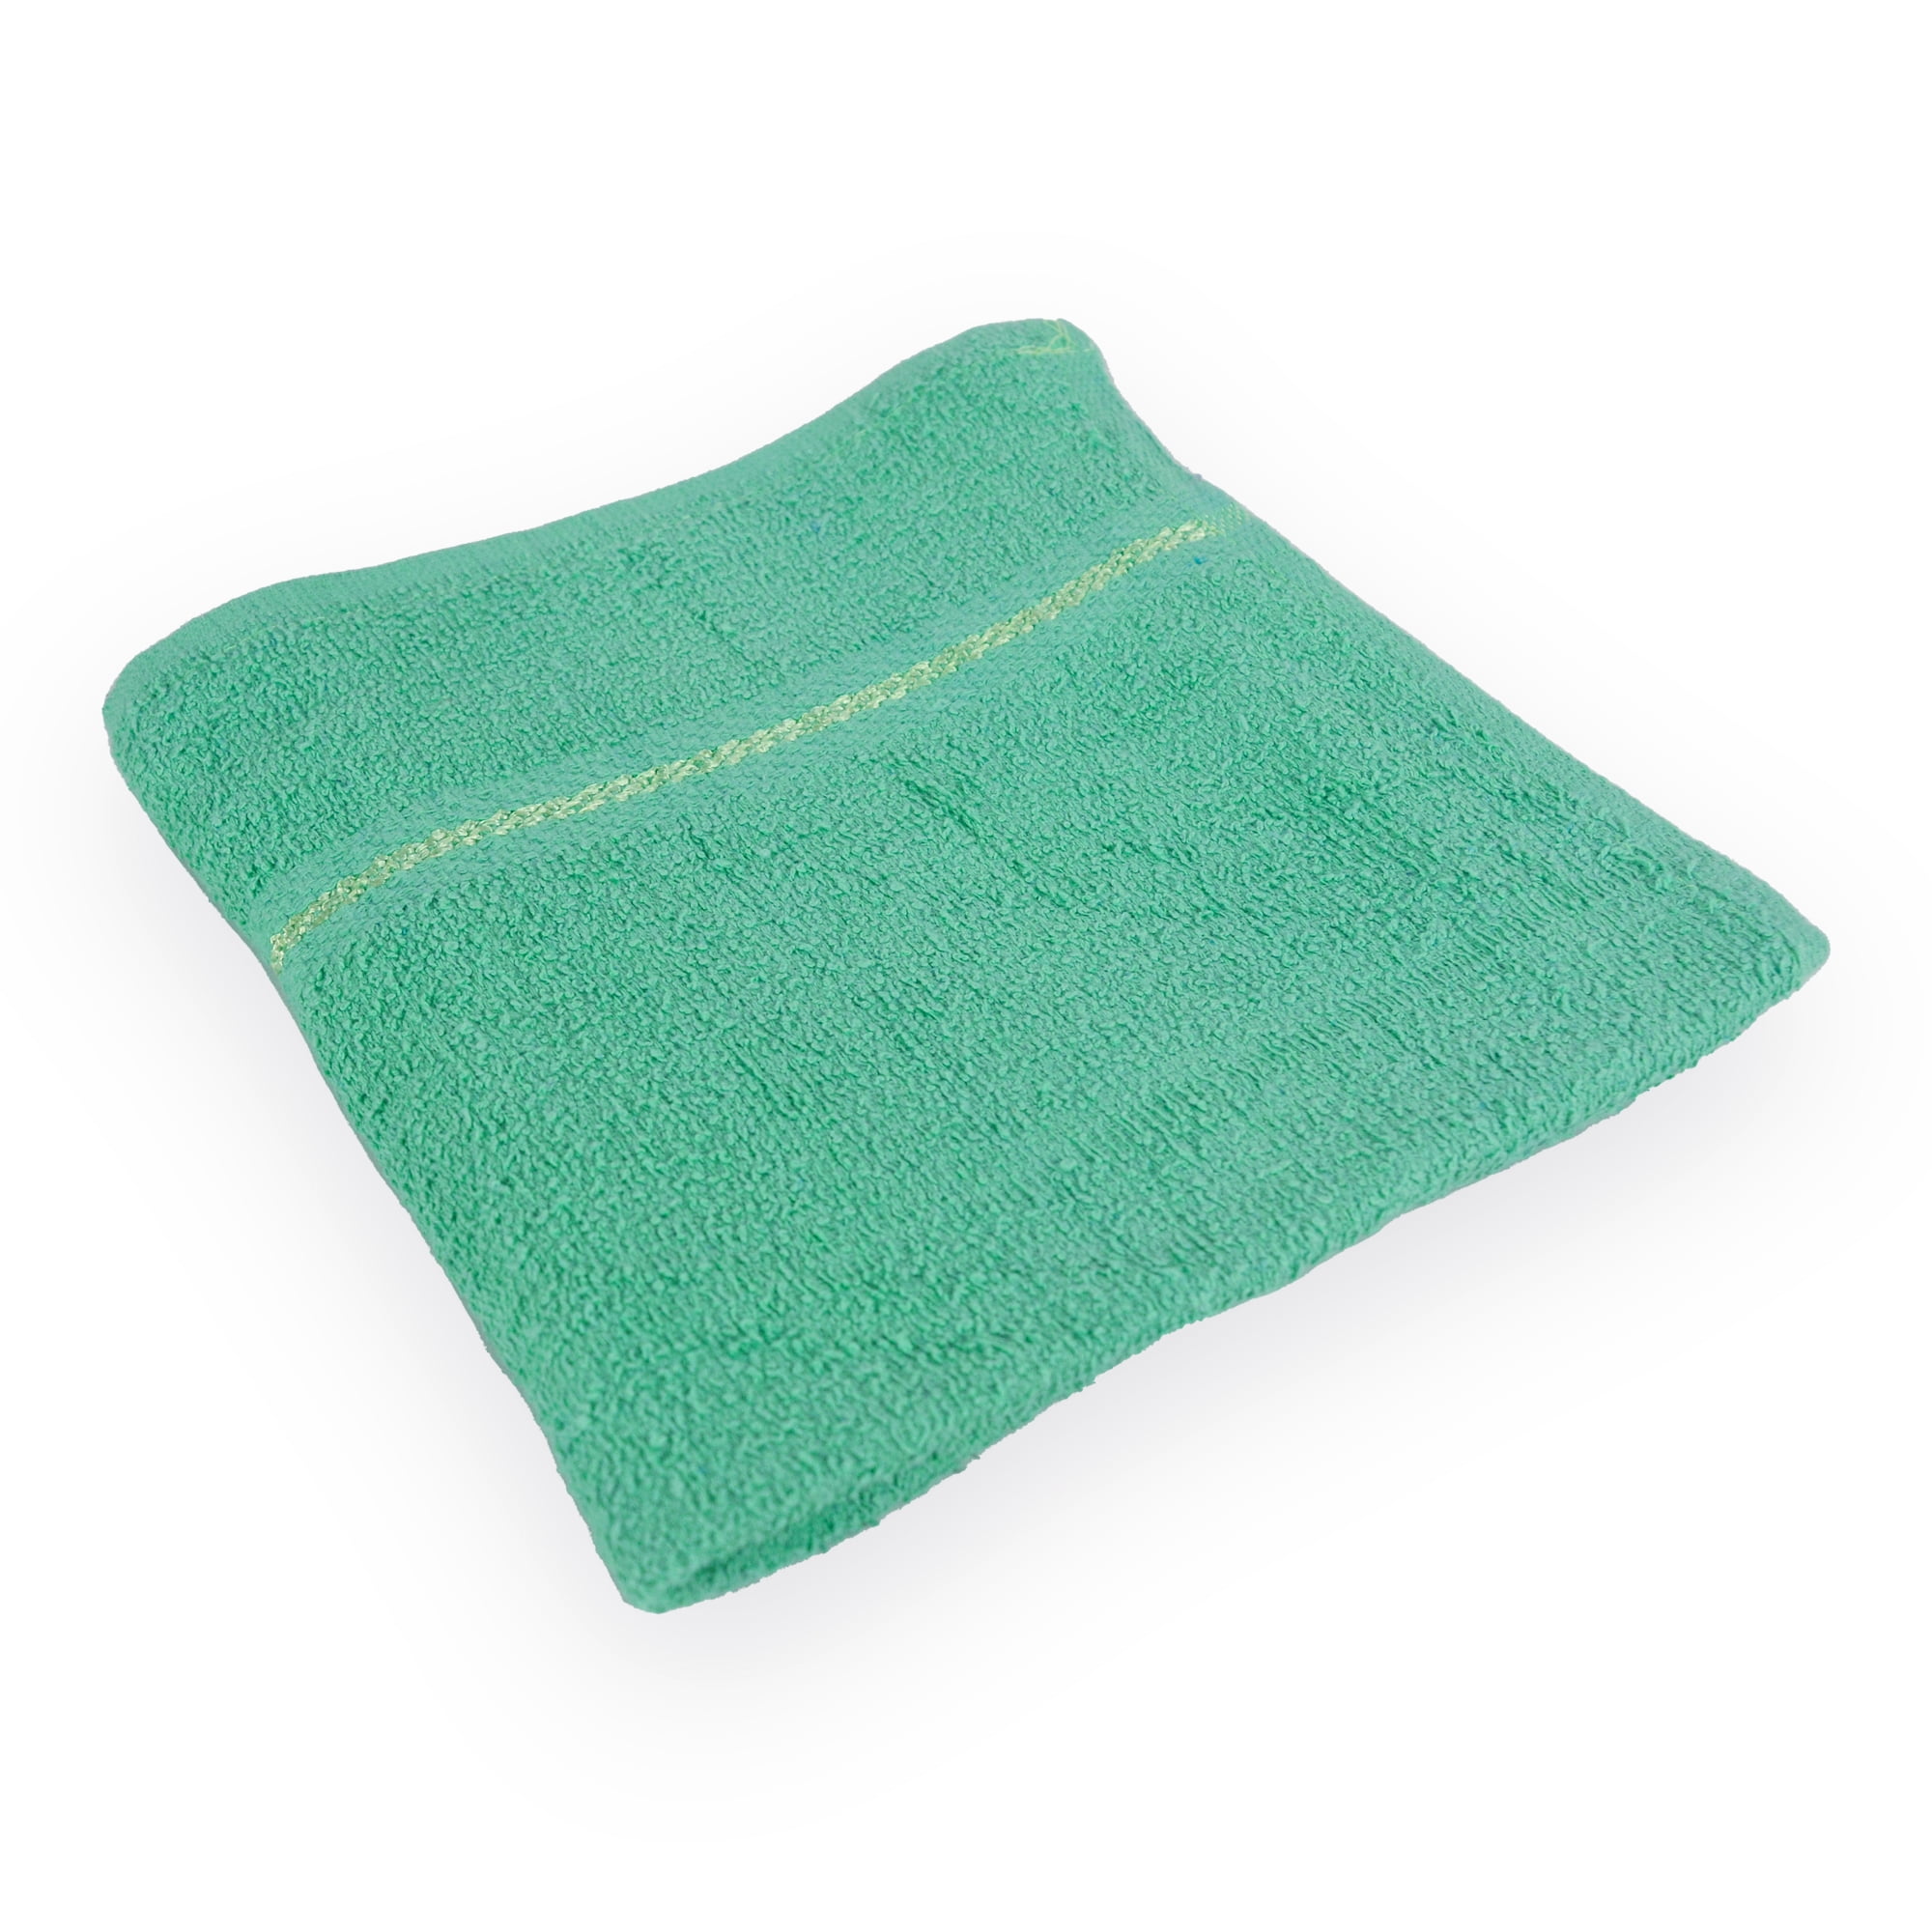 Standard Bath Towel Cotton 20x40 (Inches) Apple Green